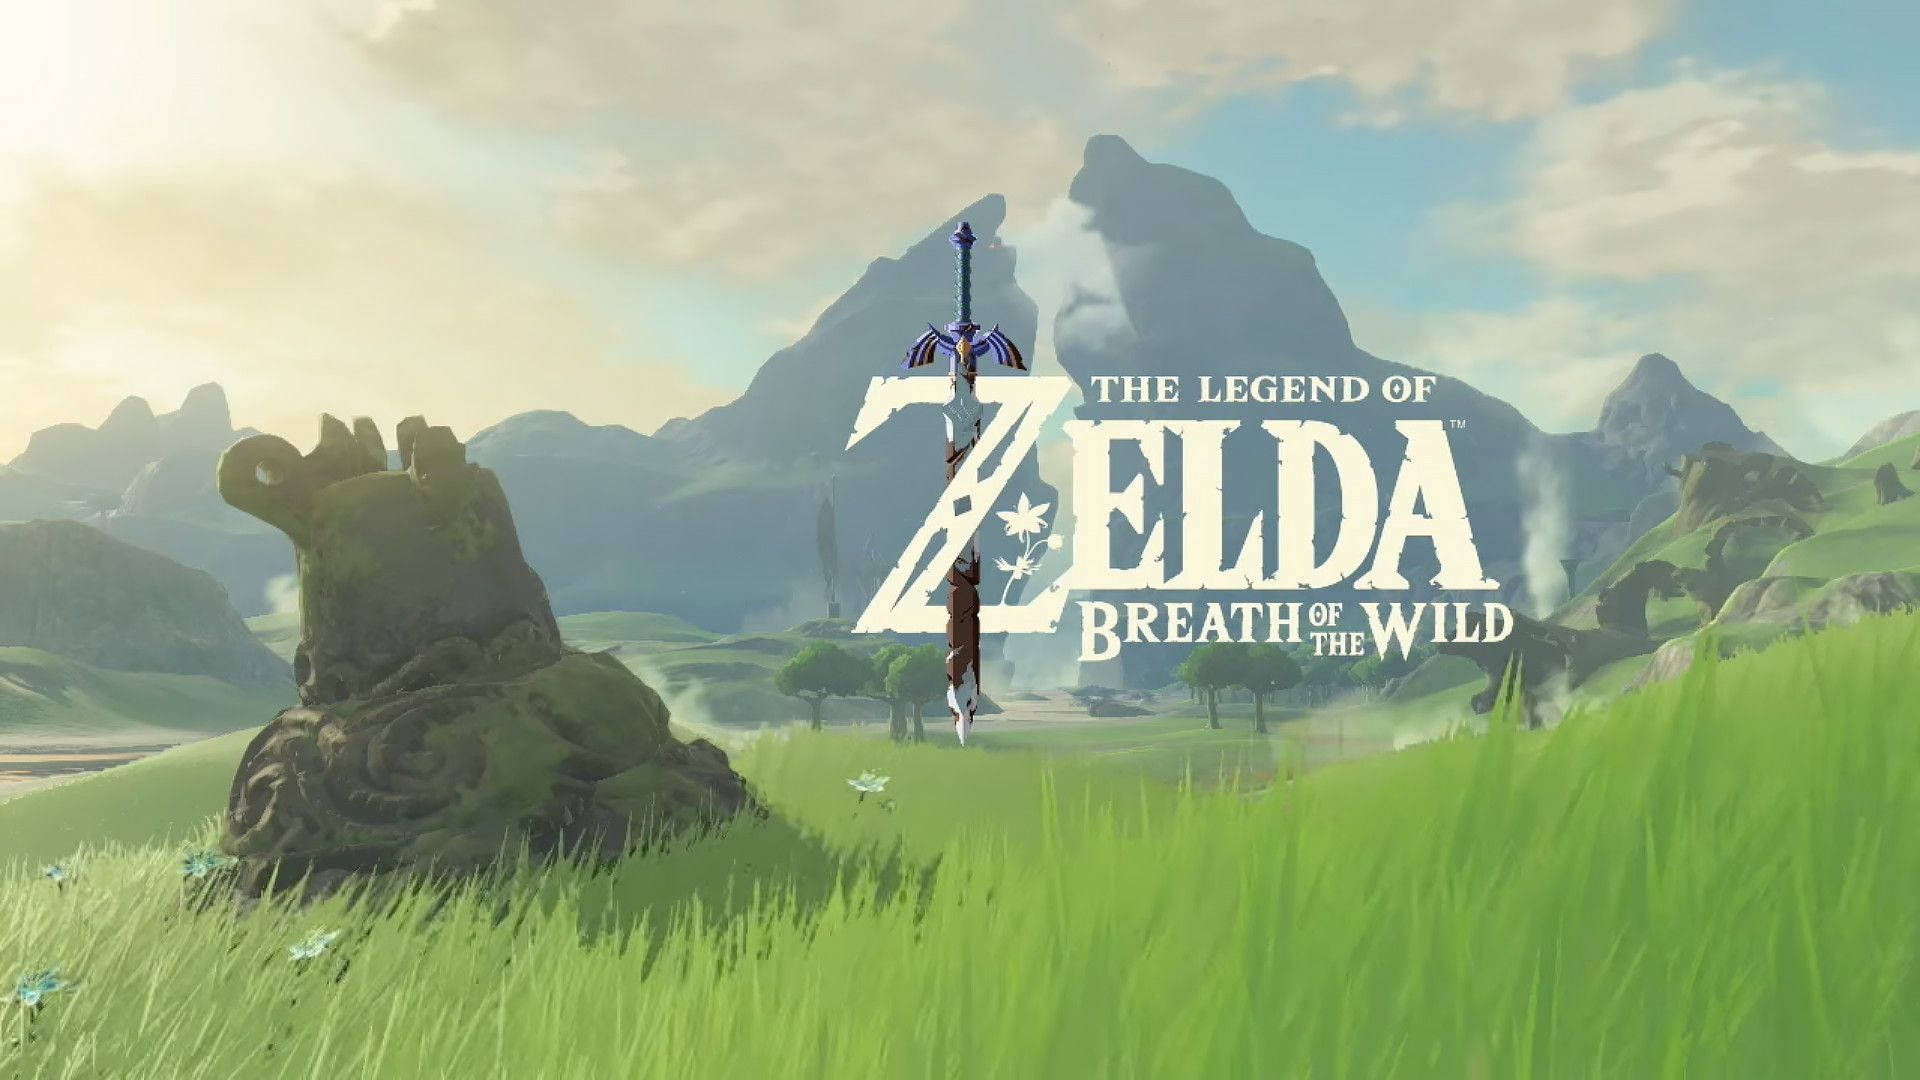 Take in the beautiful landscape of Hyrule in The Legend of Zelda: Breath of the Wild. Wallpaper